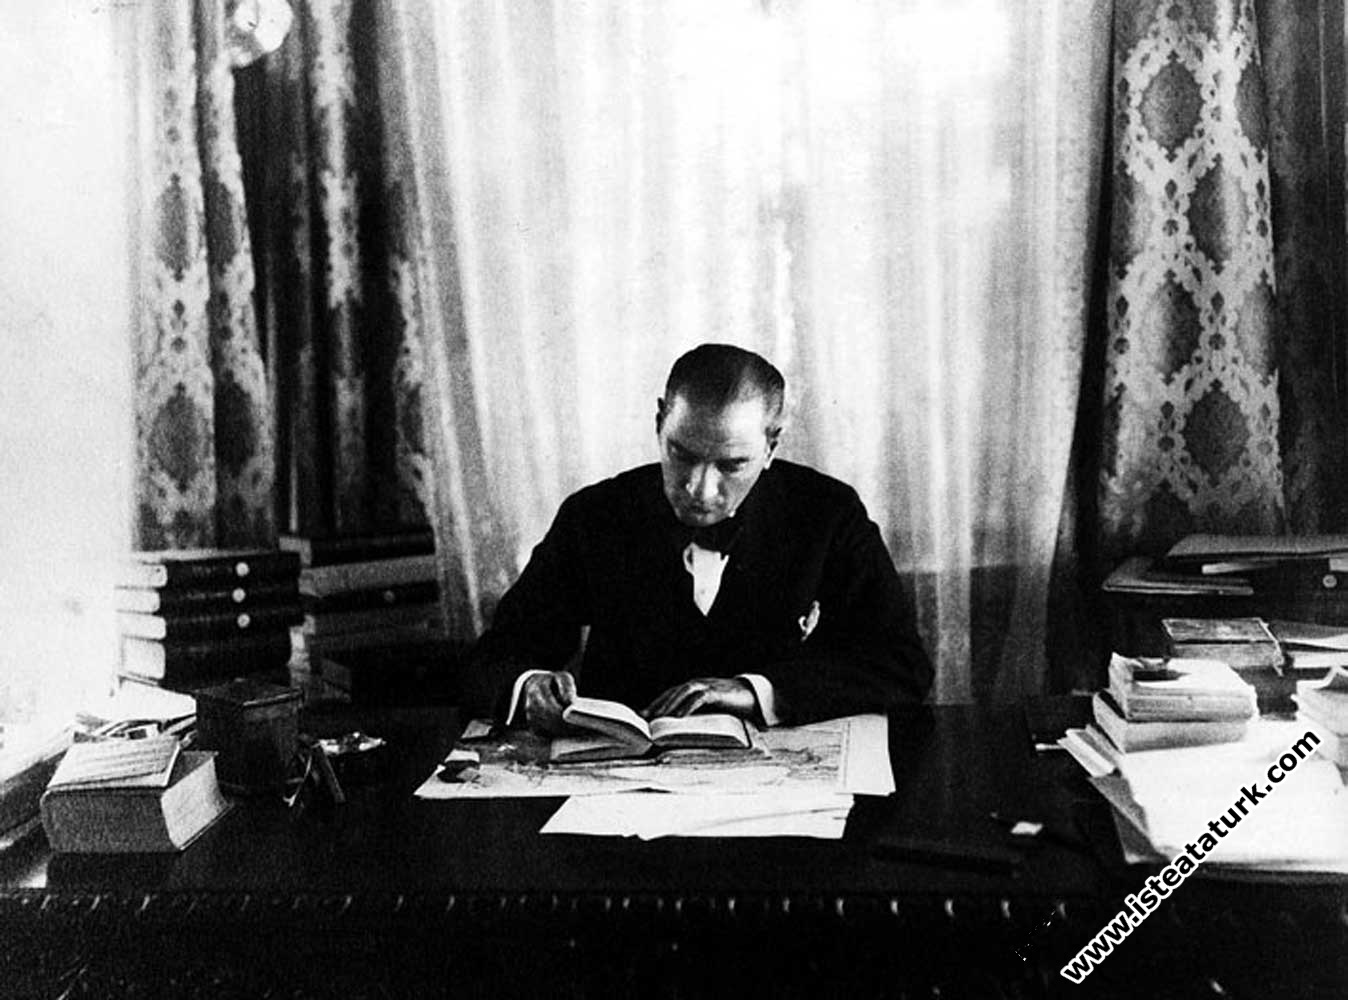 Atatürk and Colonialism (Imperialism)